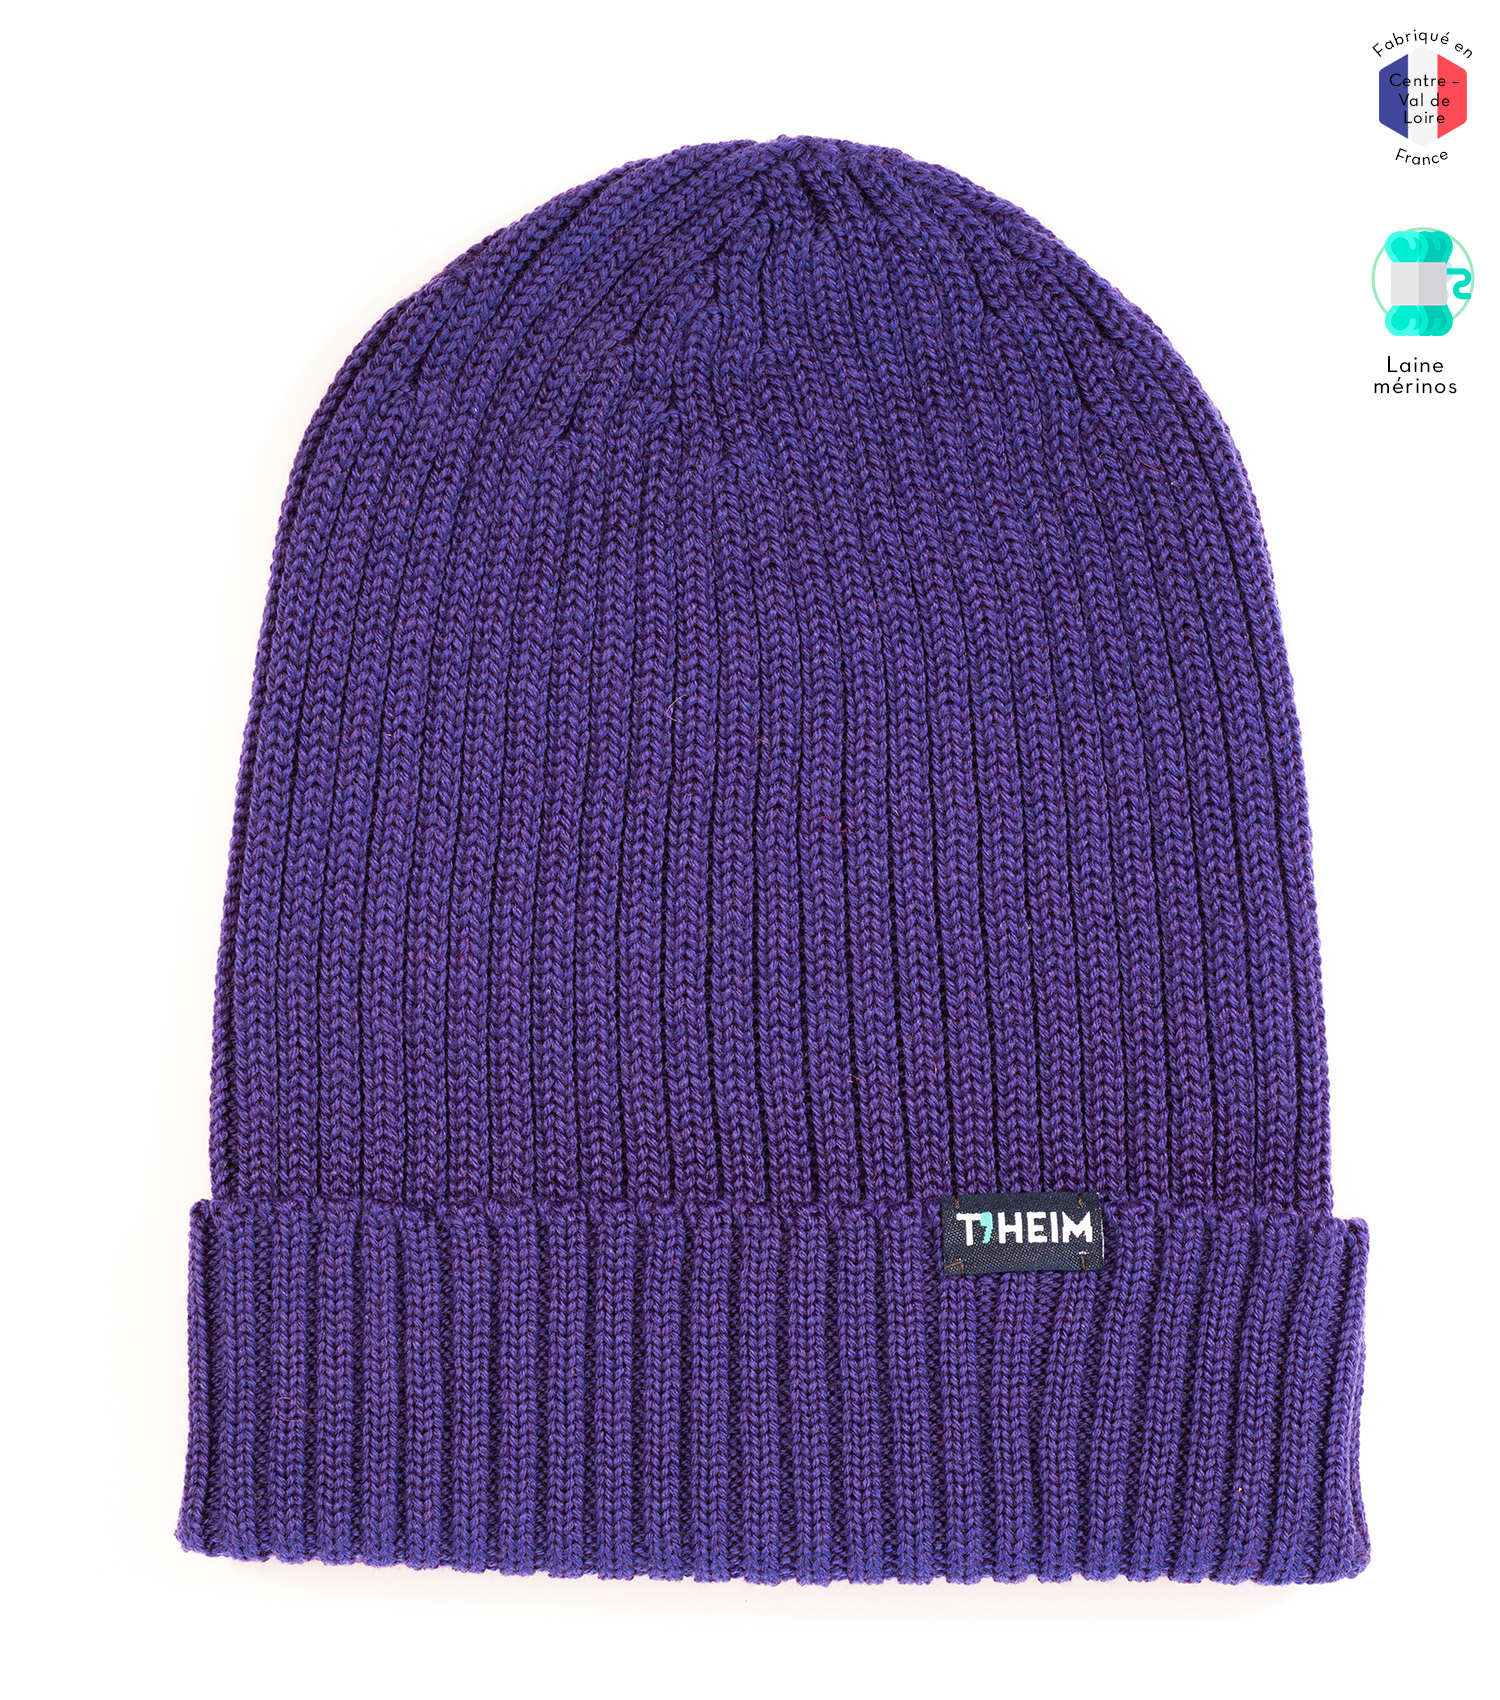 theim-bonnet-laine-merinos-made-in-france-violet-purple-1500x1700px